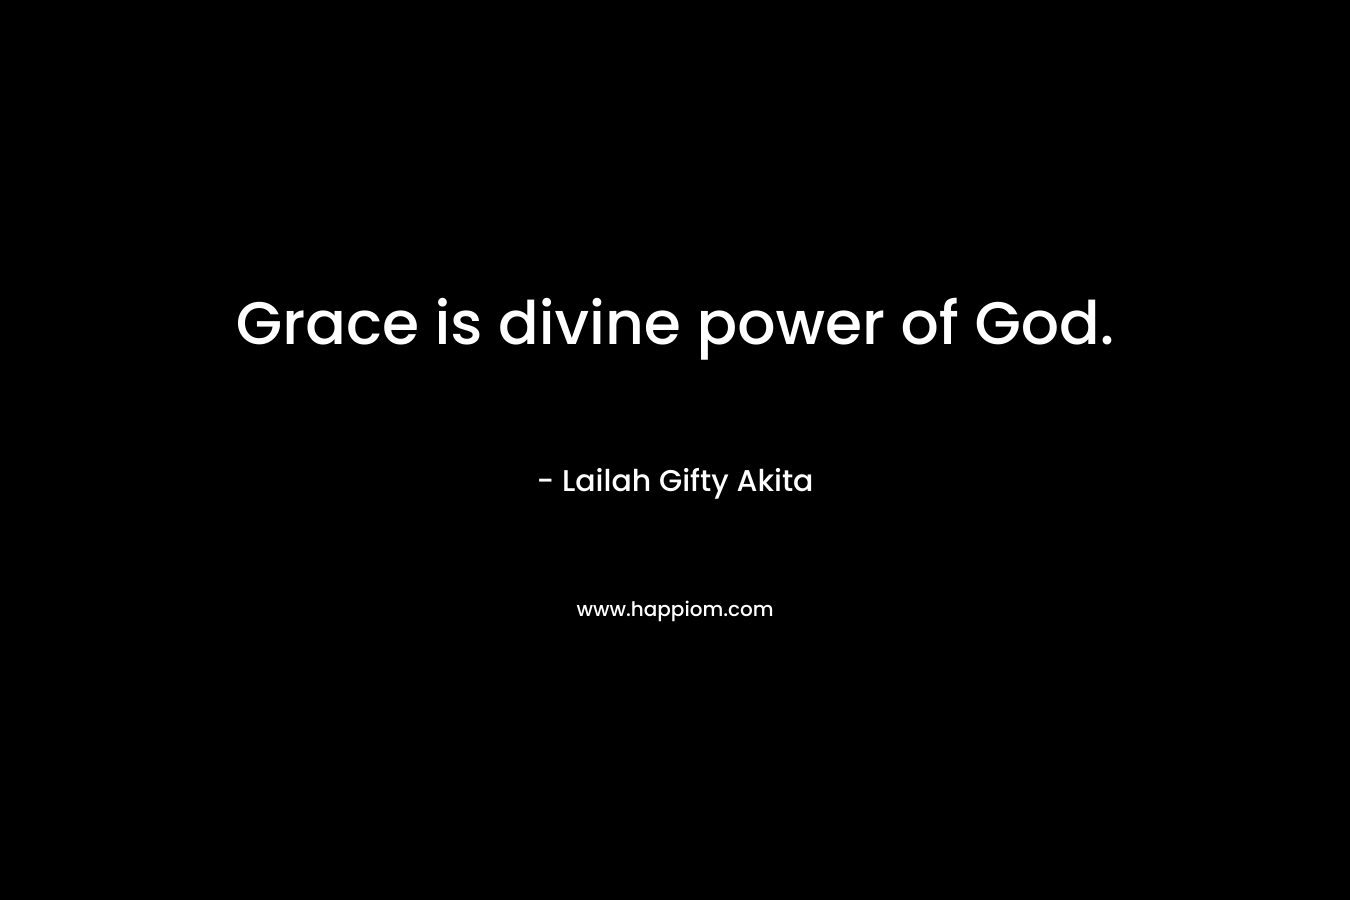 Grace is divine power of God.